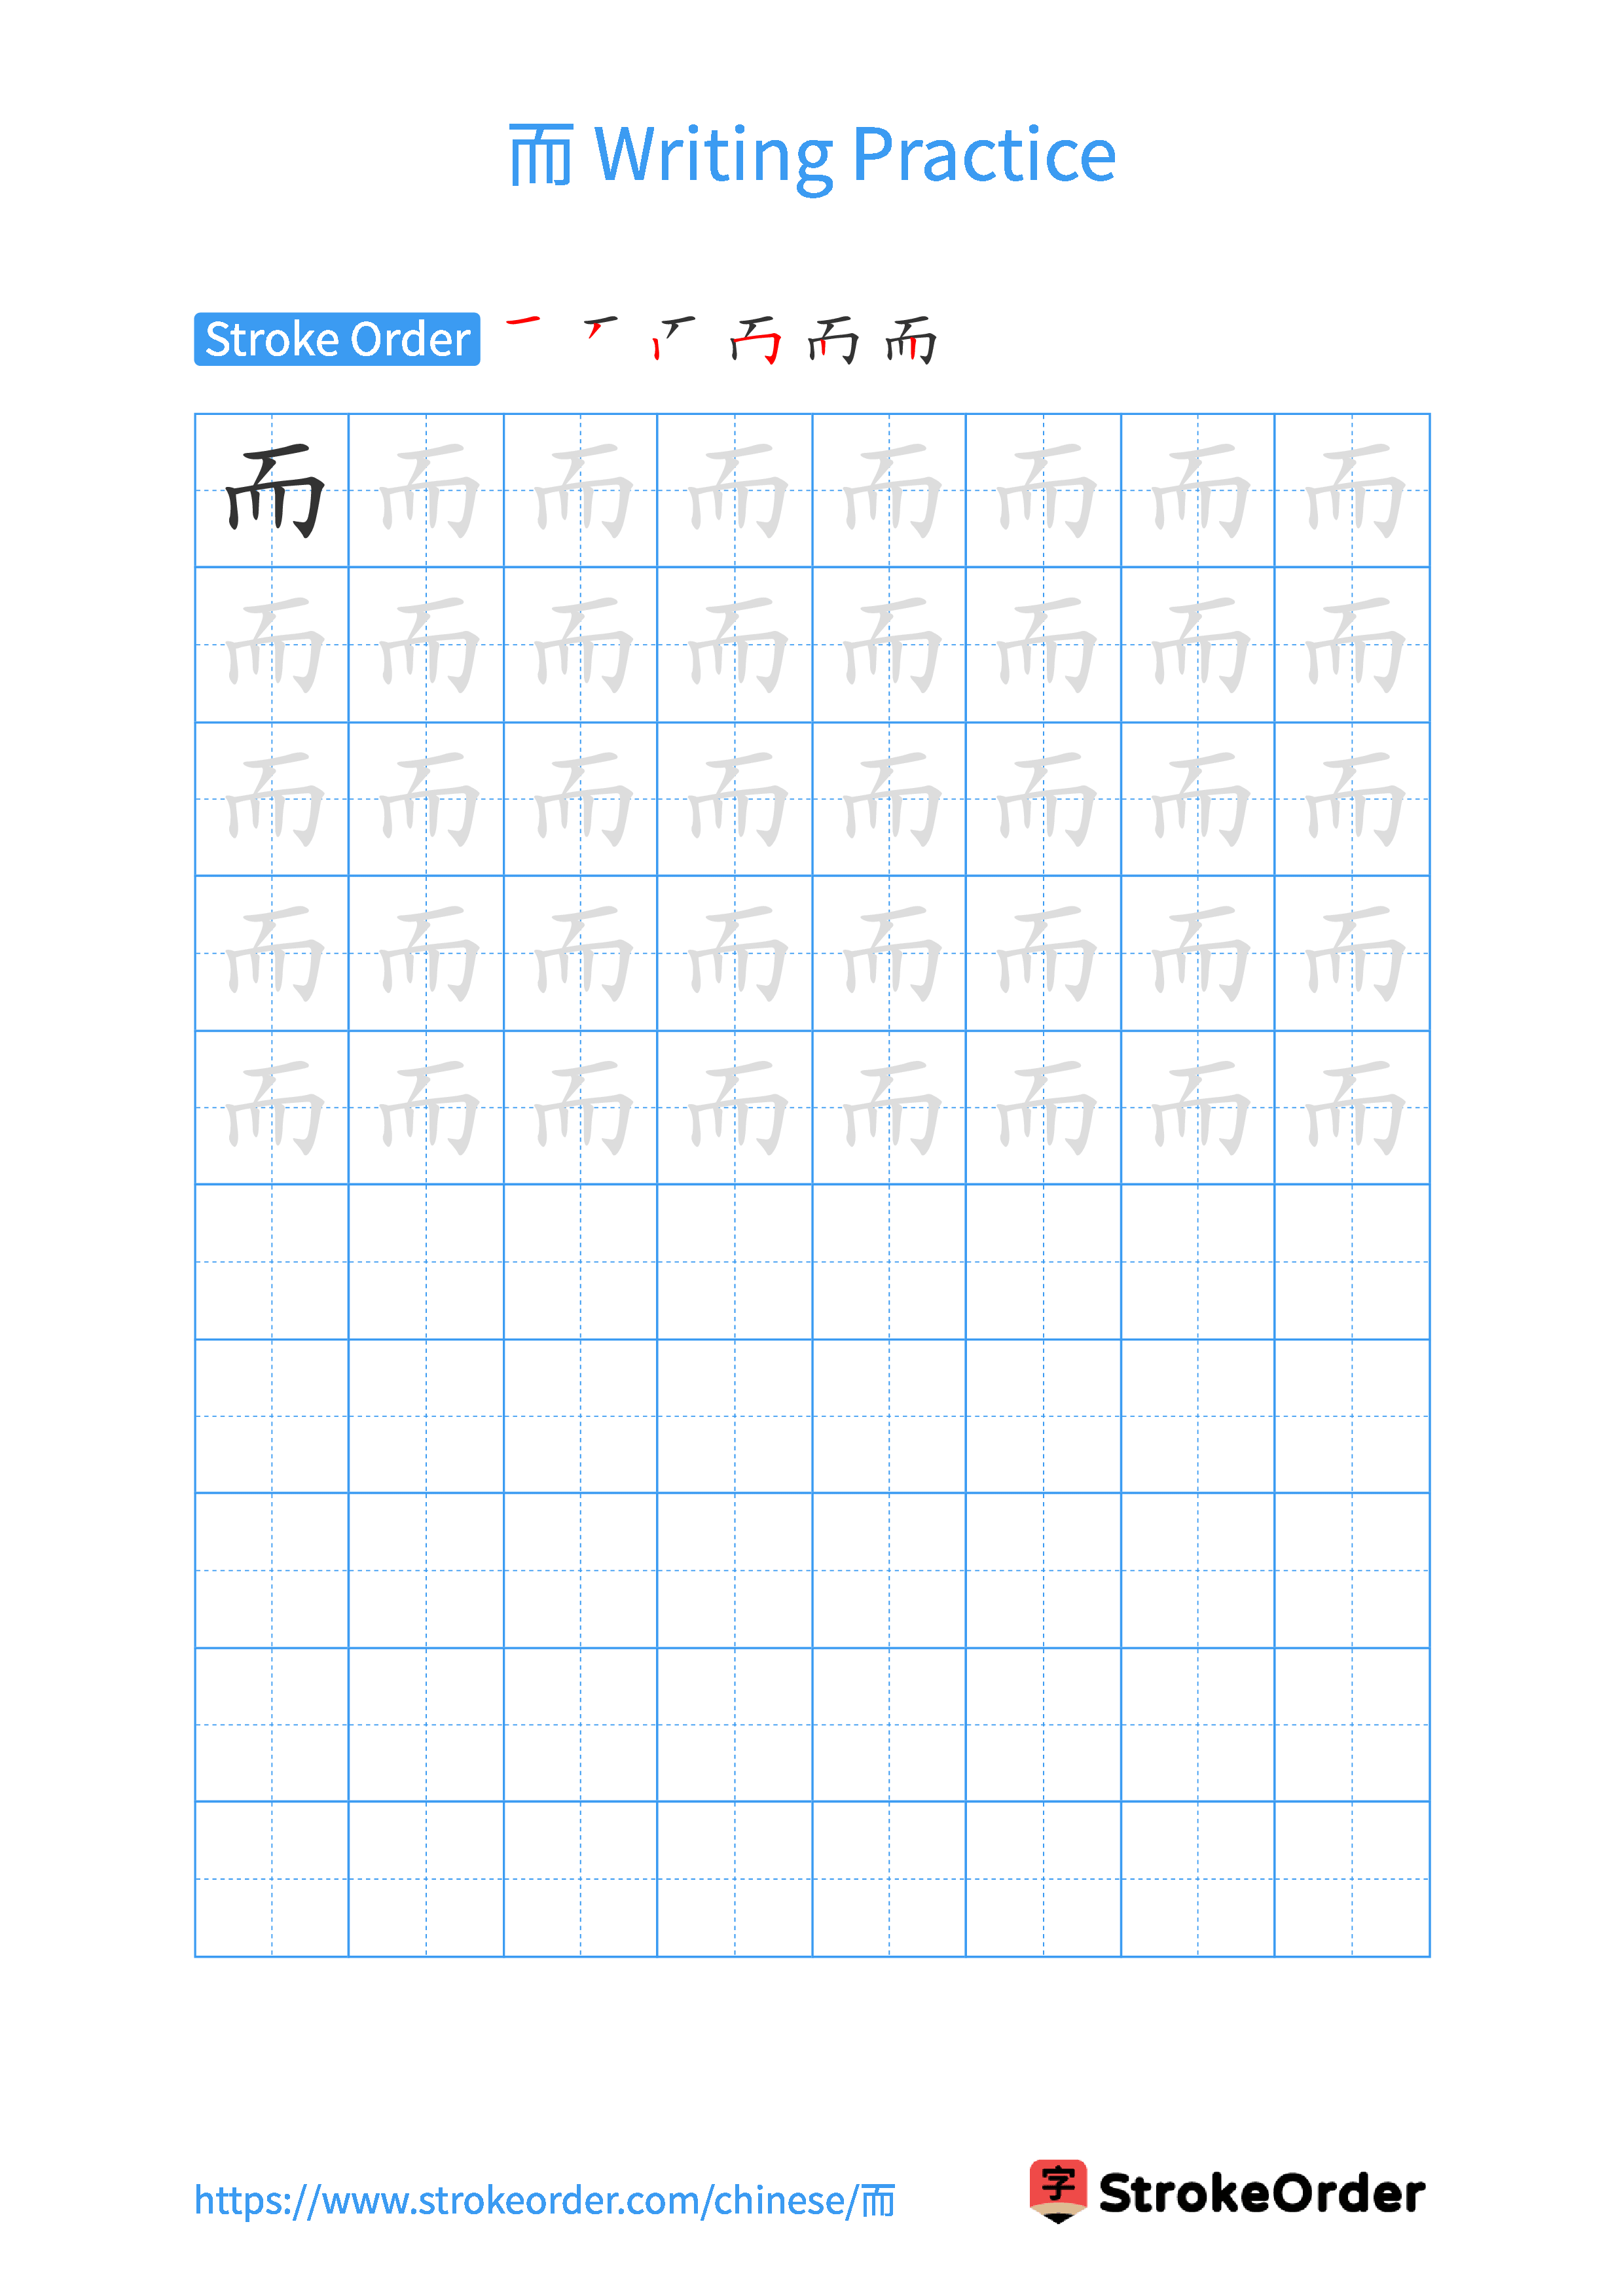 Printable Handwriting Practice Worksheet of the Chinese character 而 in Portrait Orientation (Tian Zi Ge)